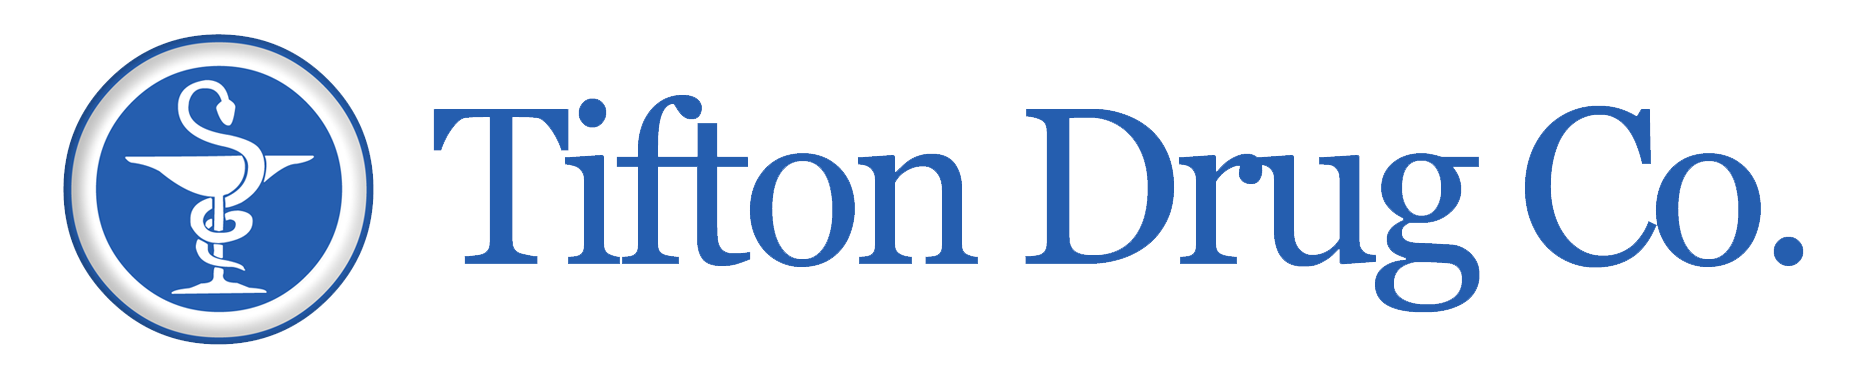 Tifton Drug Company Logo